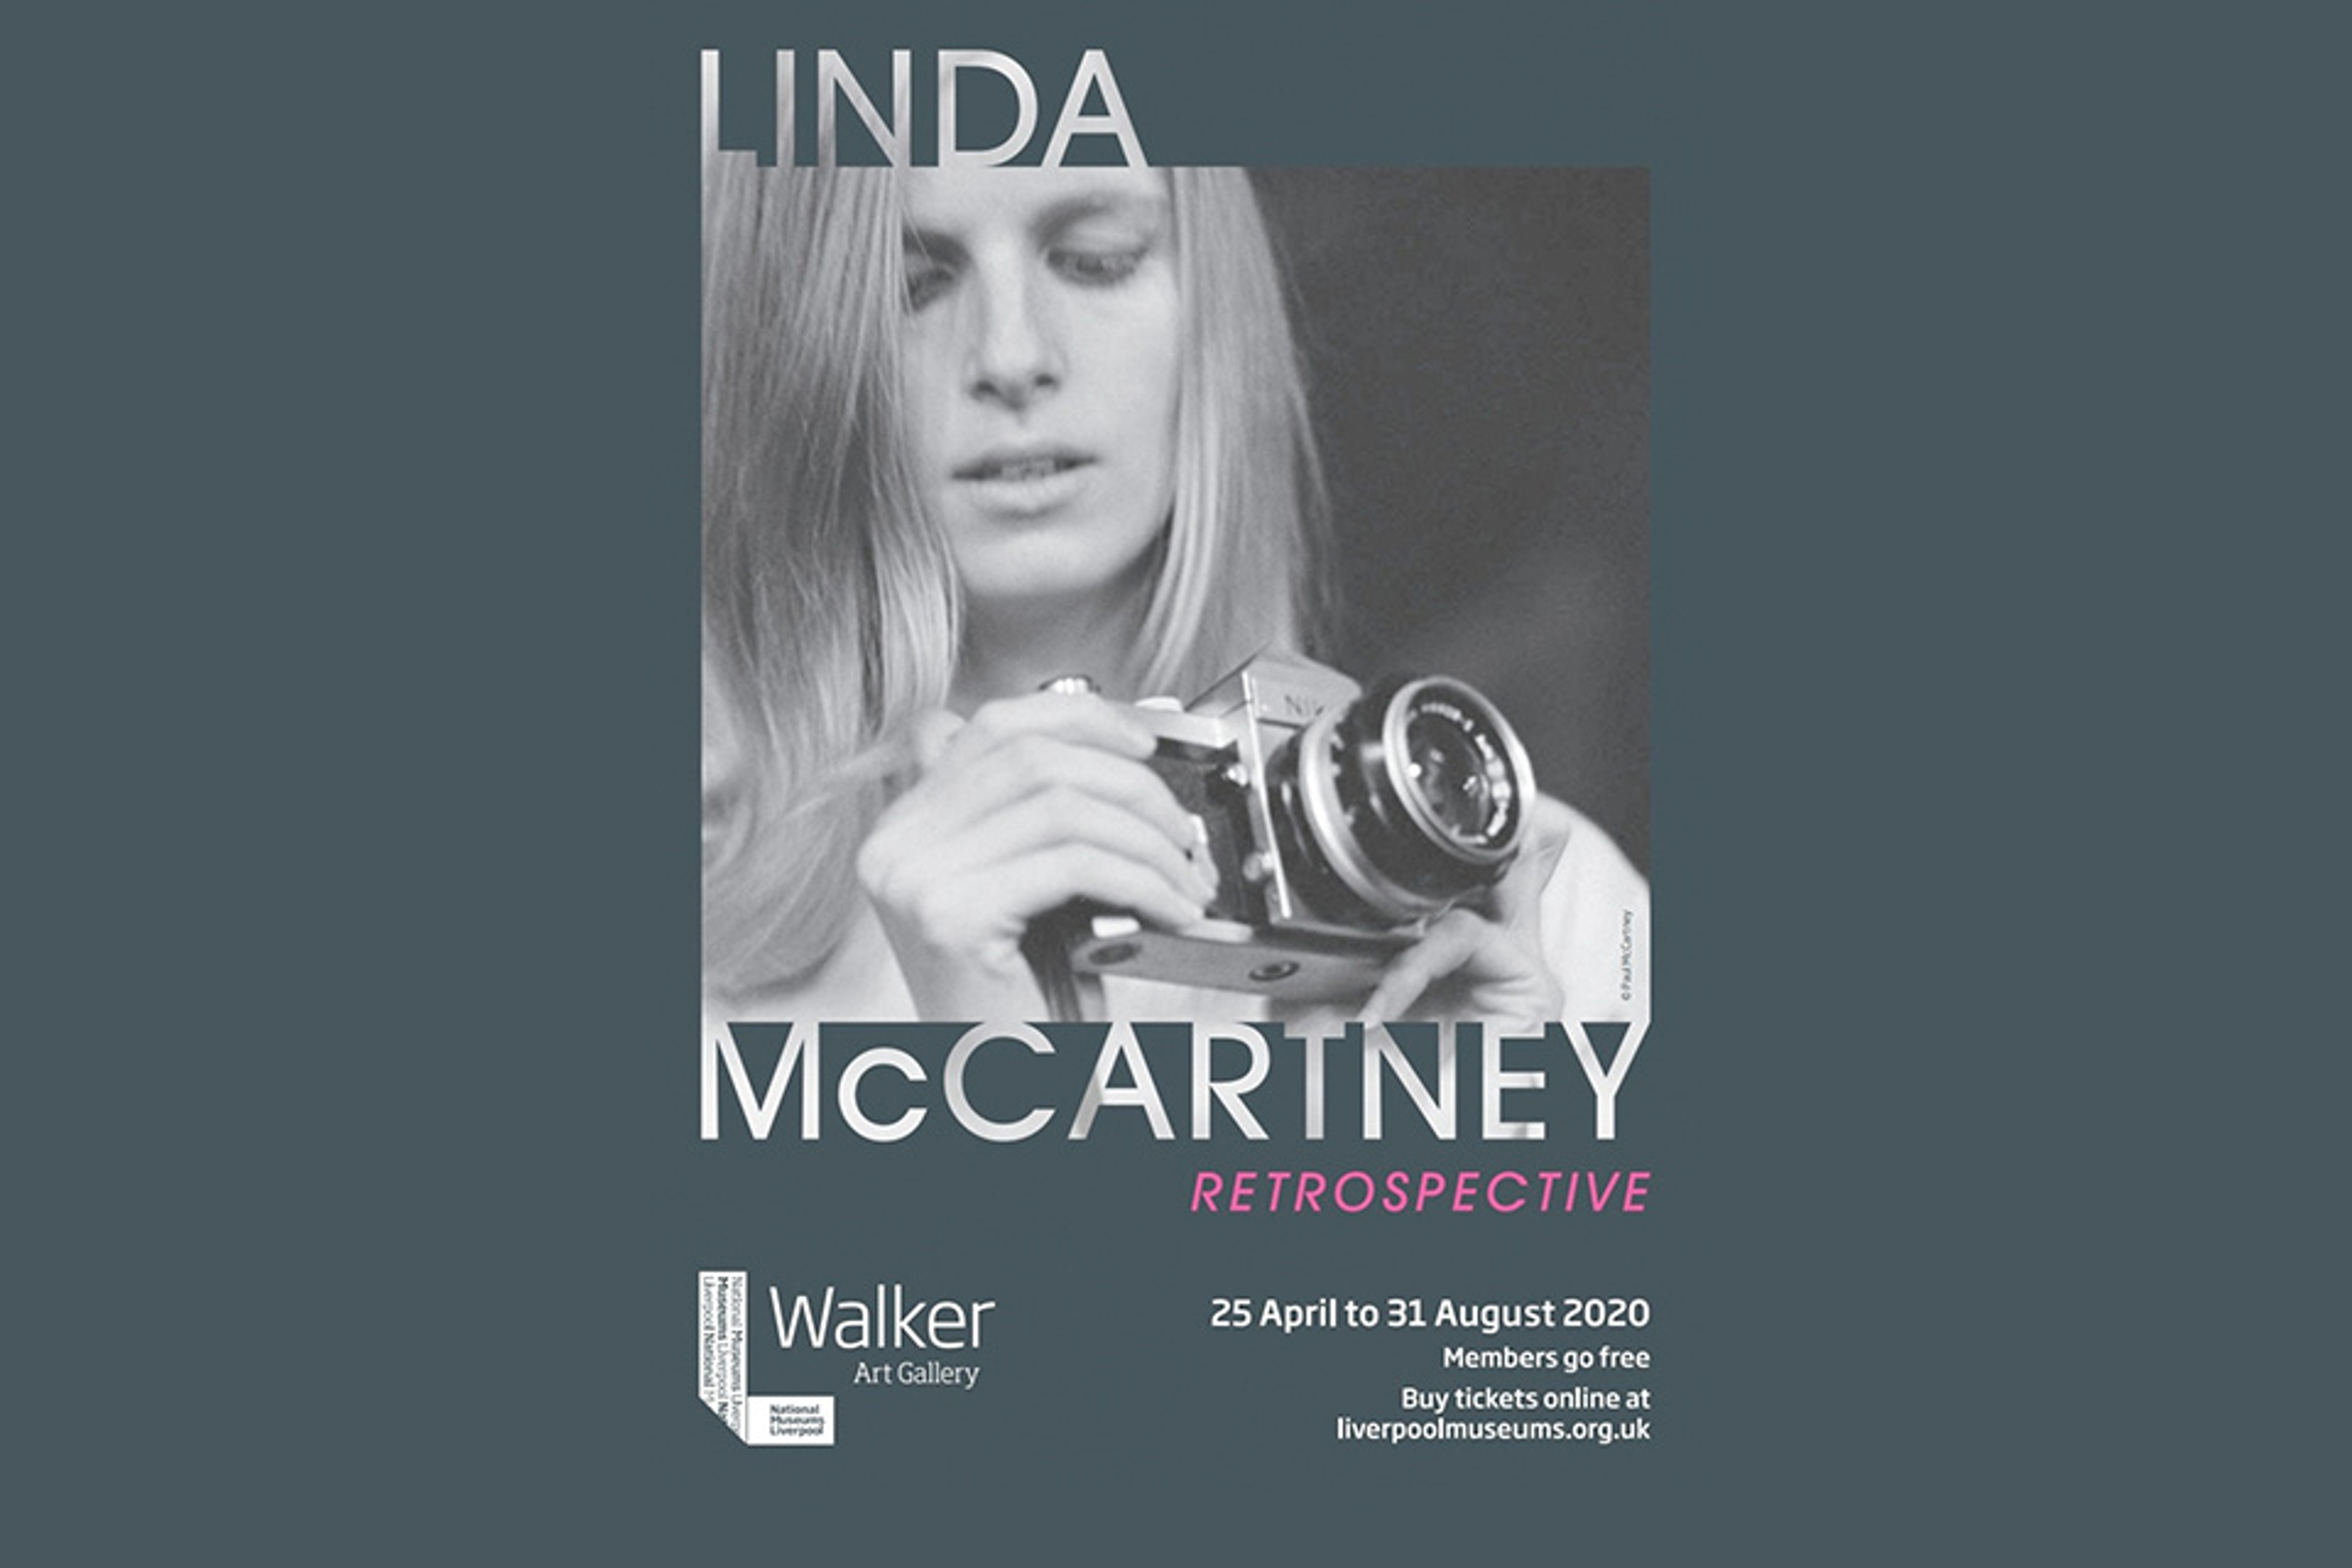 Poster for Linda McCartney Retrospective at Walker Art Gallery, Liverpool from 25th April 2020 till 31st August 2020.